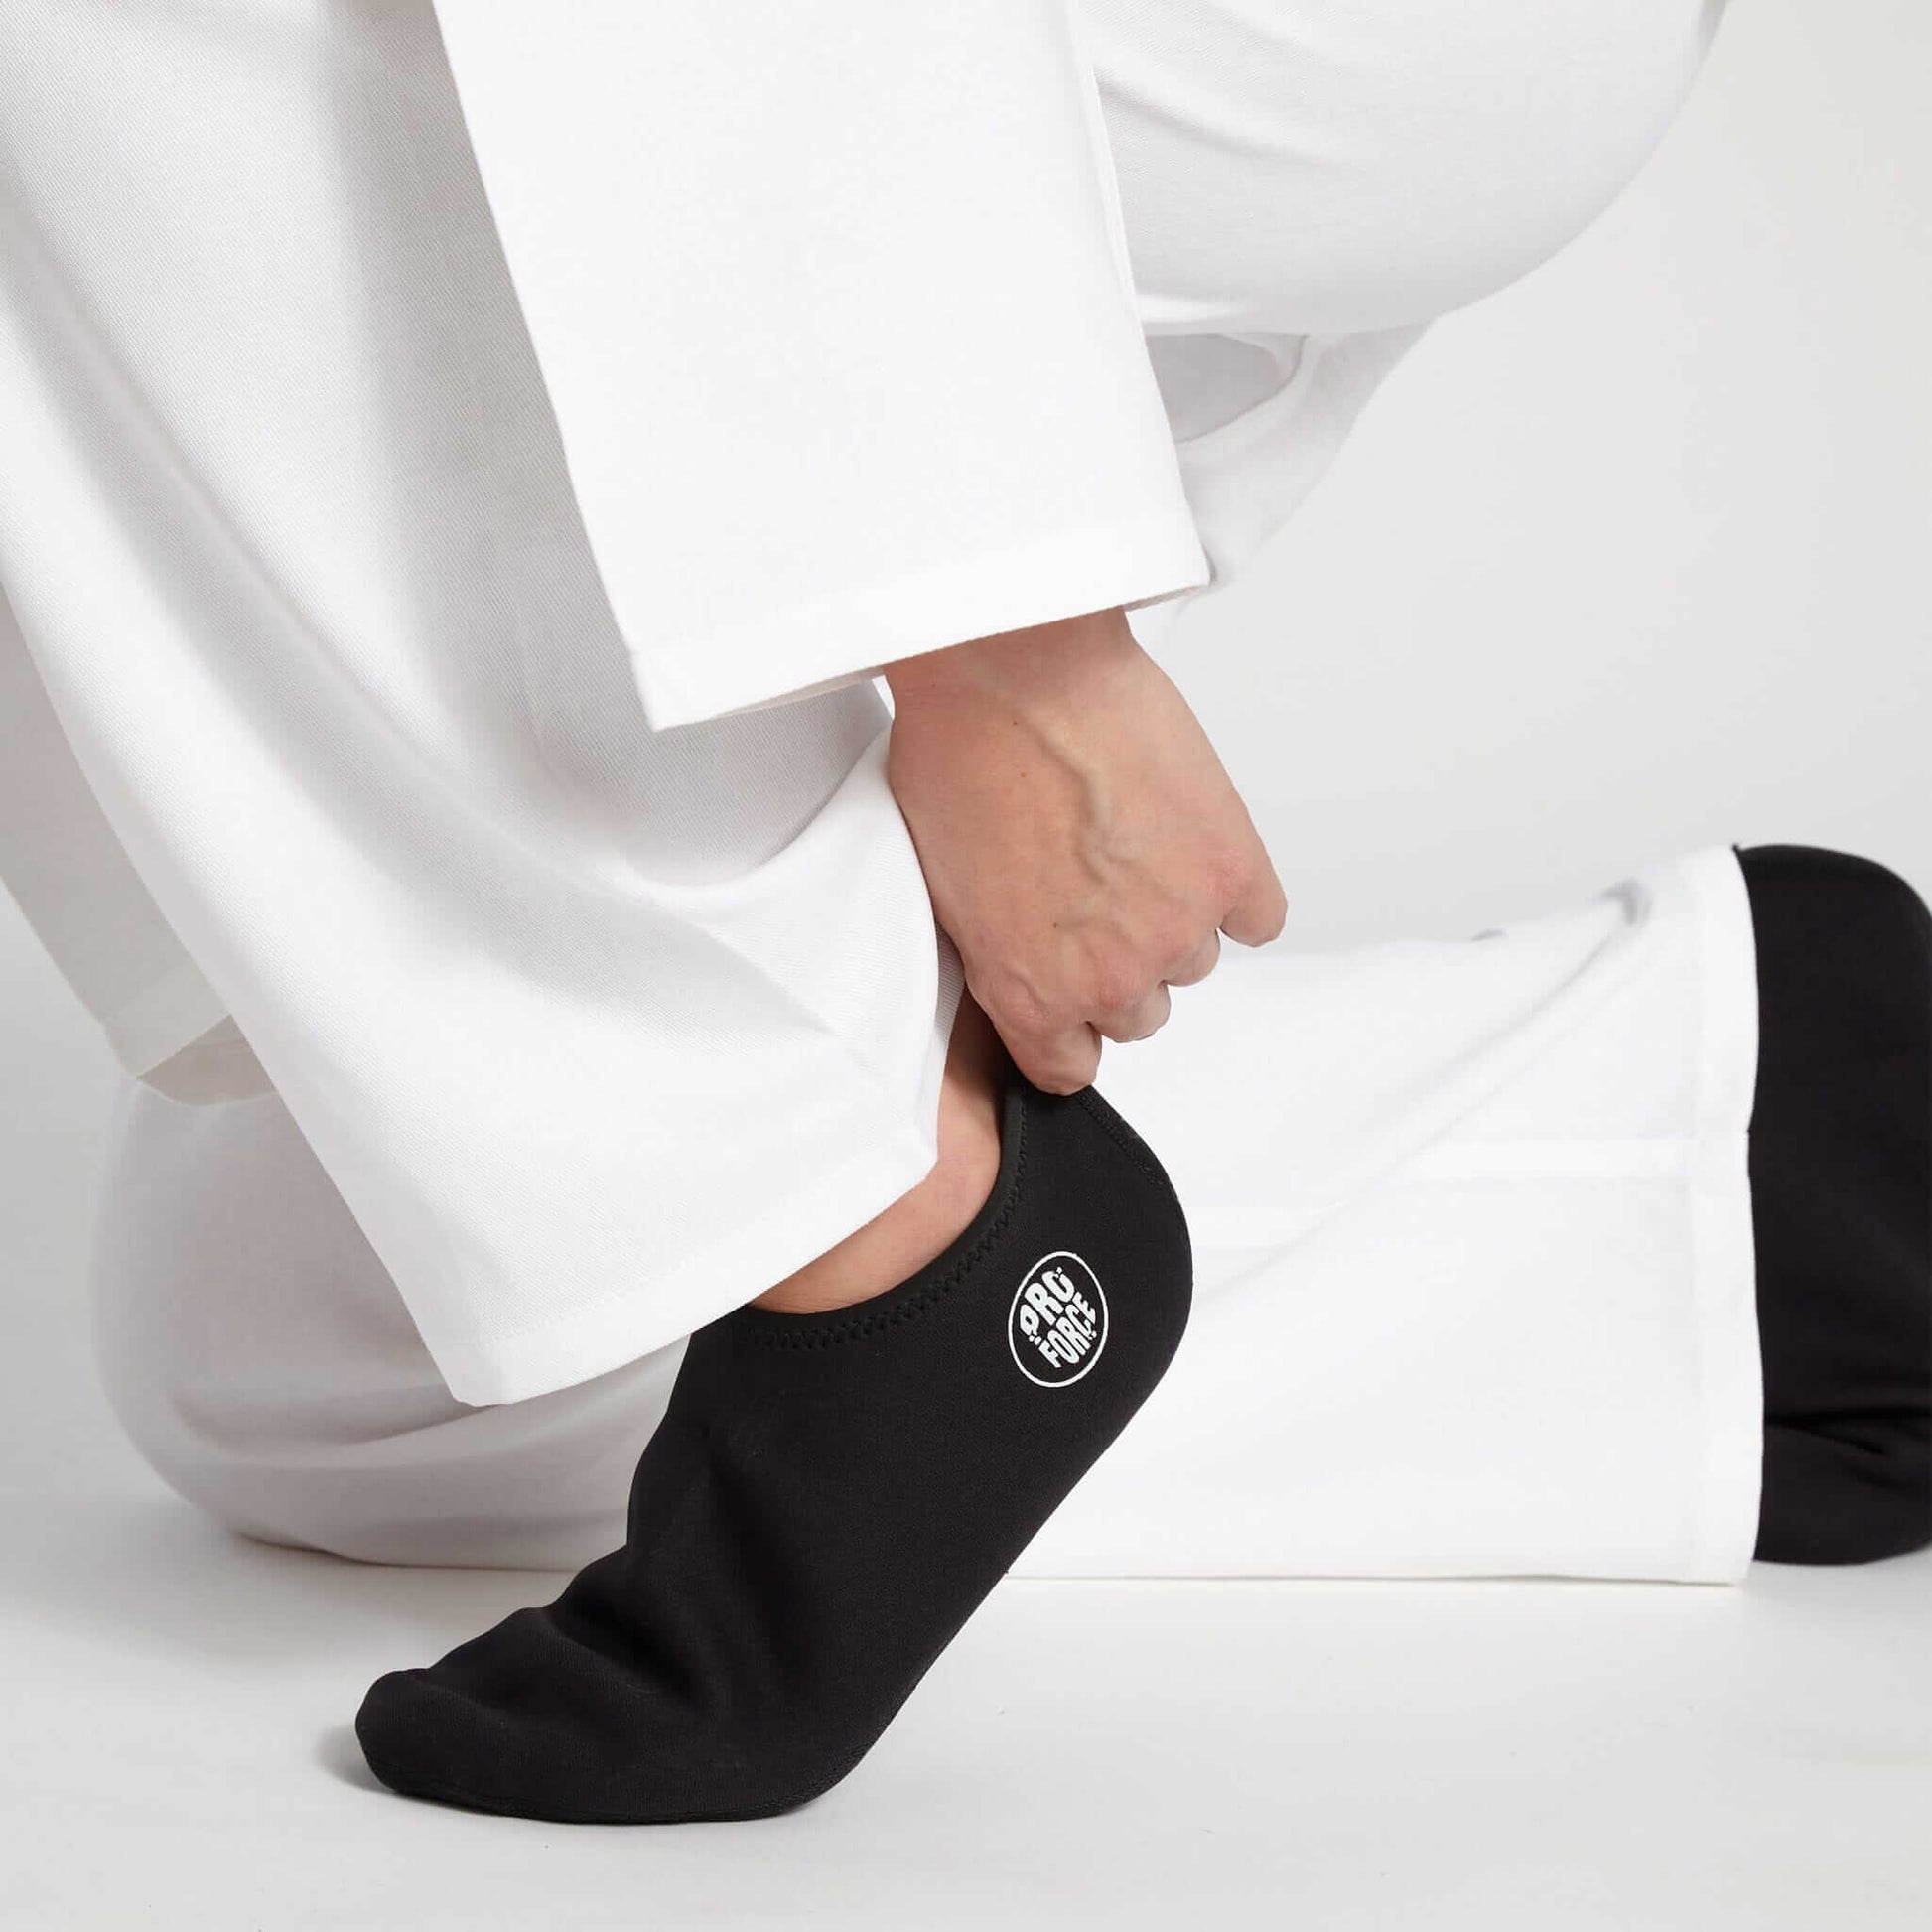 Hy-Gens 2 Shoe martial arts karate tkd mat shoes